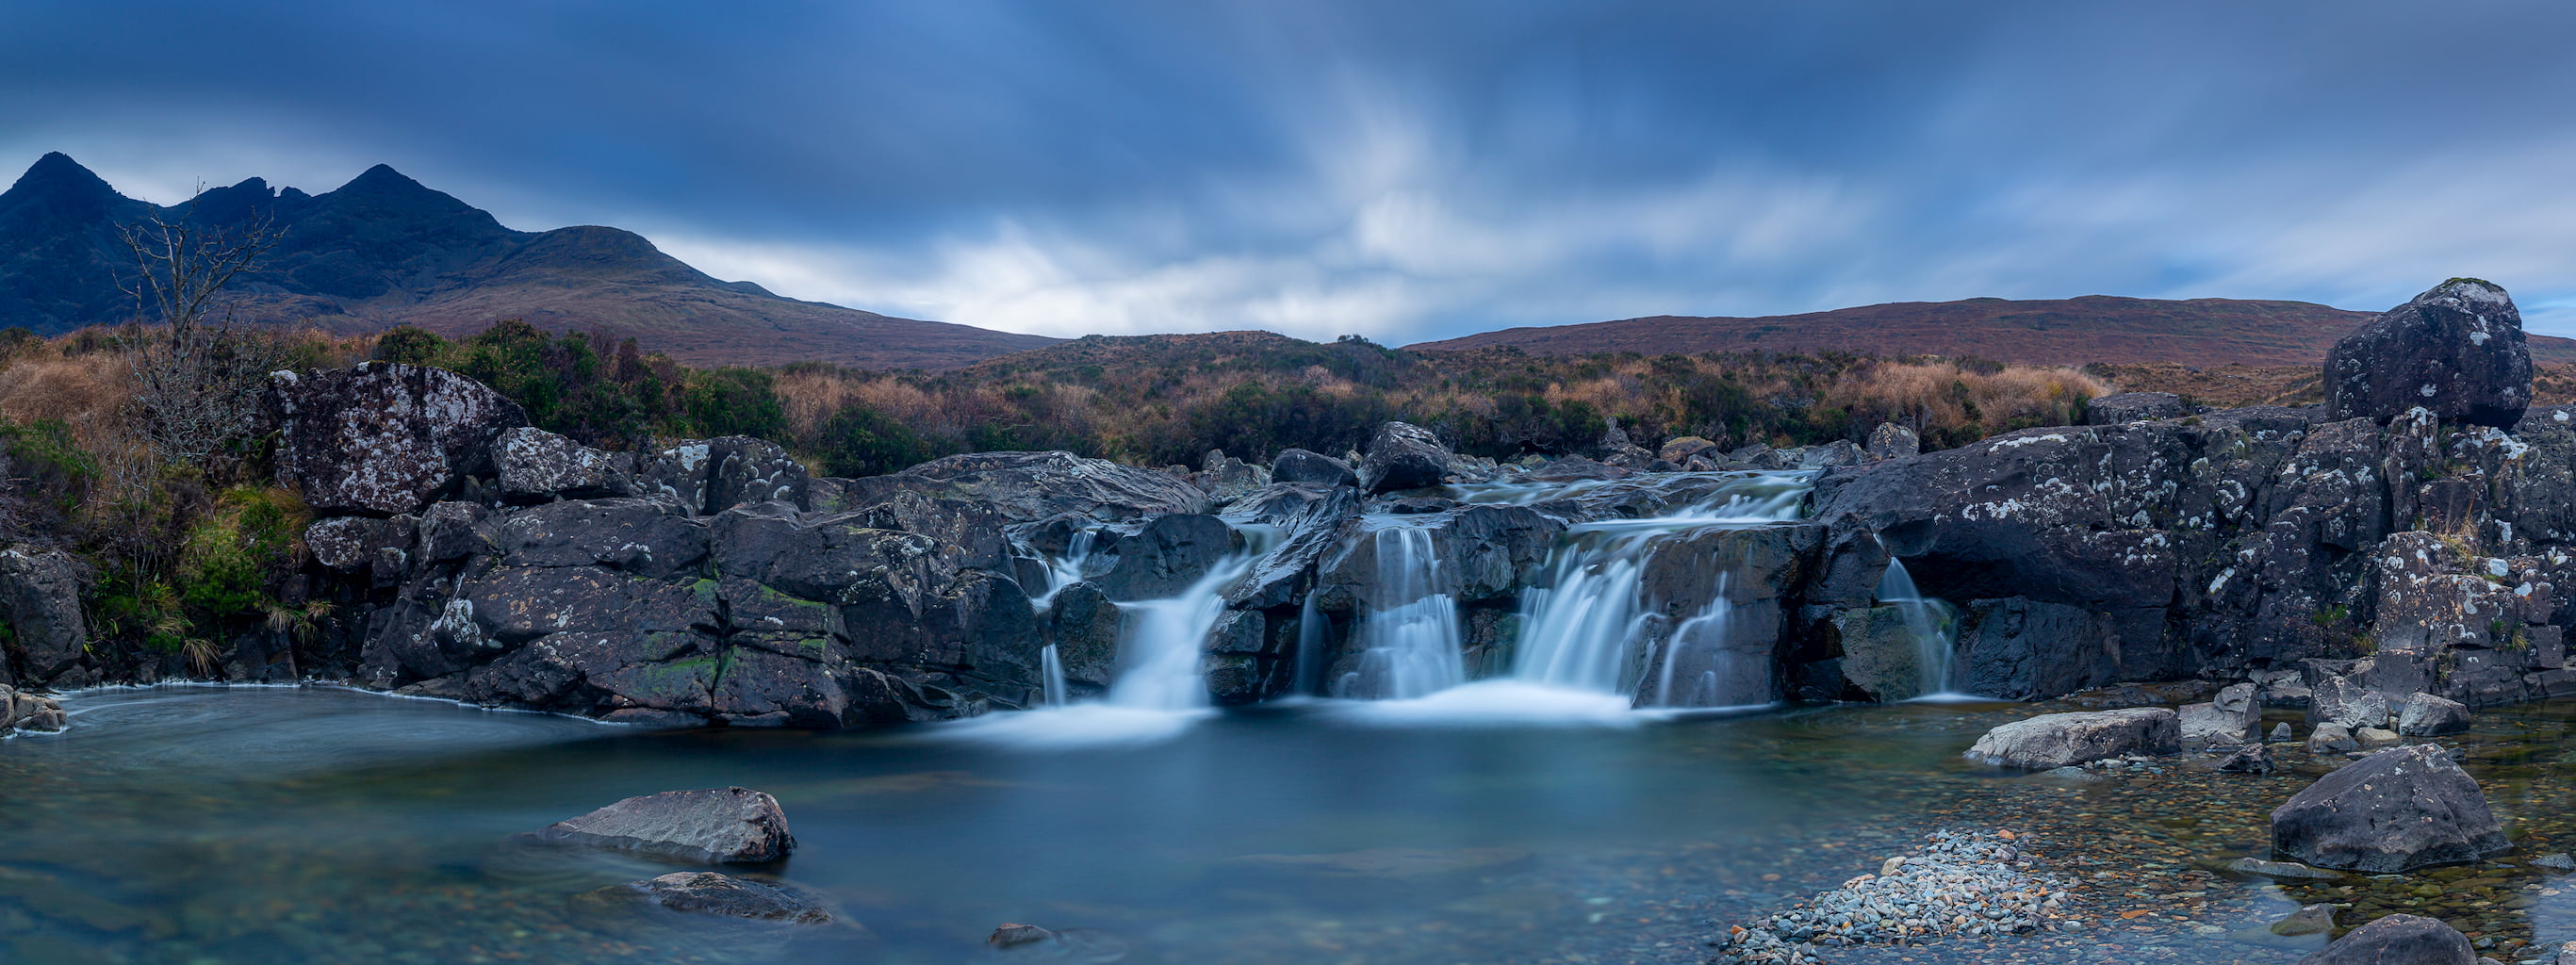 Waterfalls on the Allt Dearg Mor river near Sligachen, Isle of Skye, Scotland